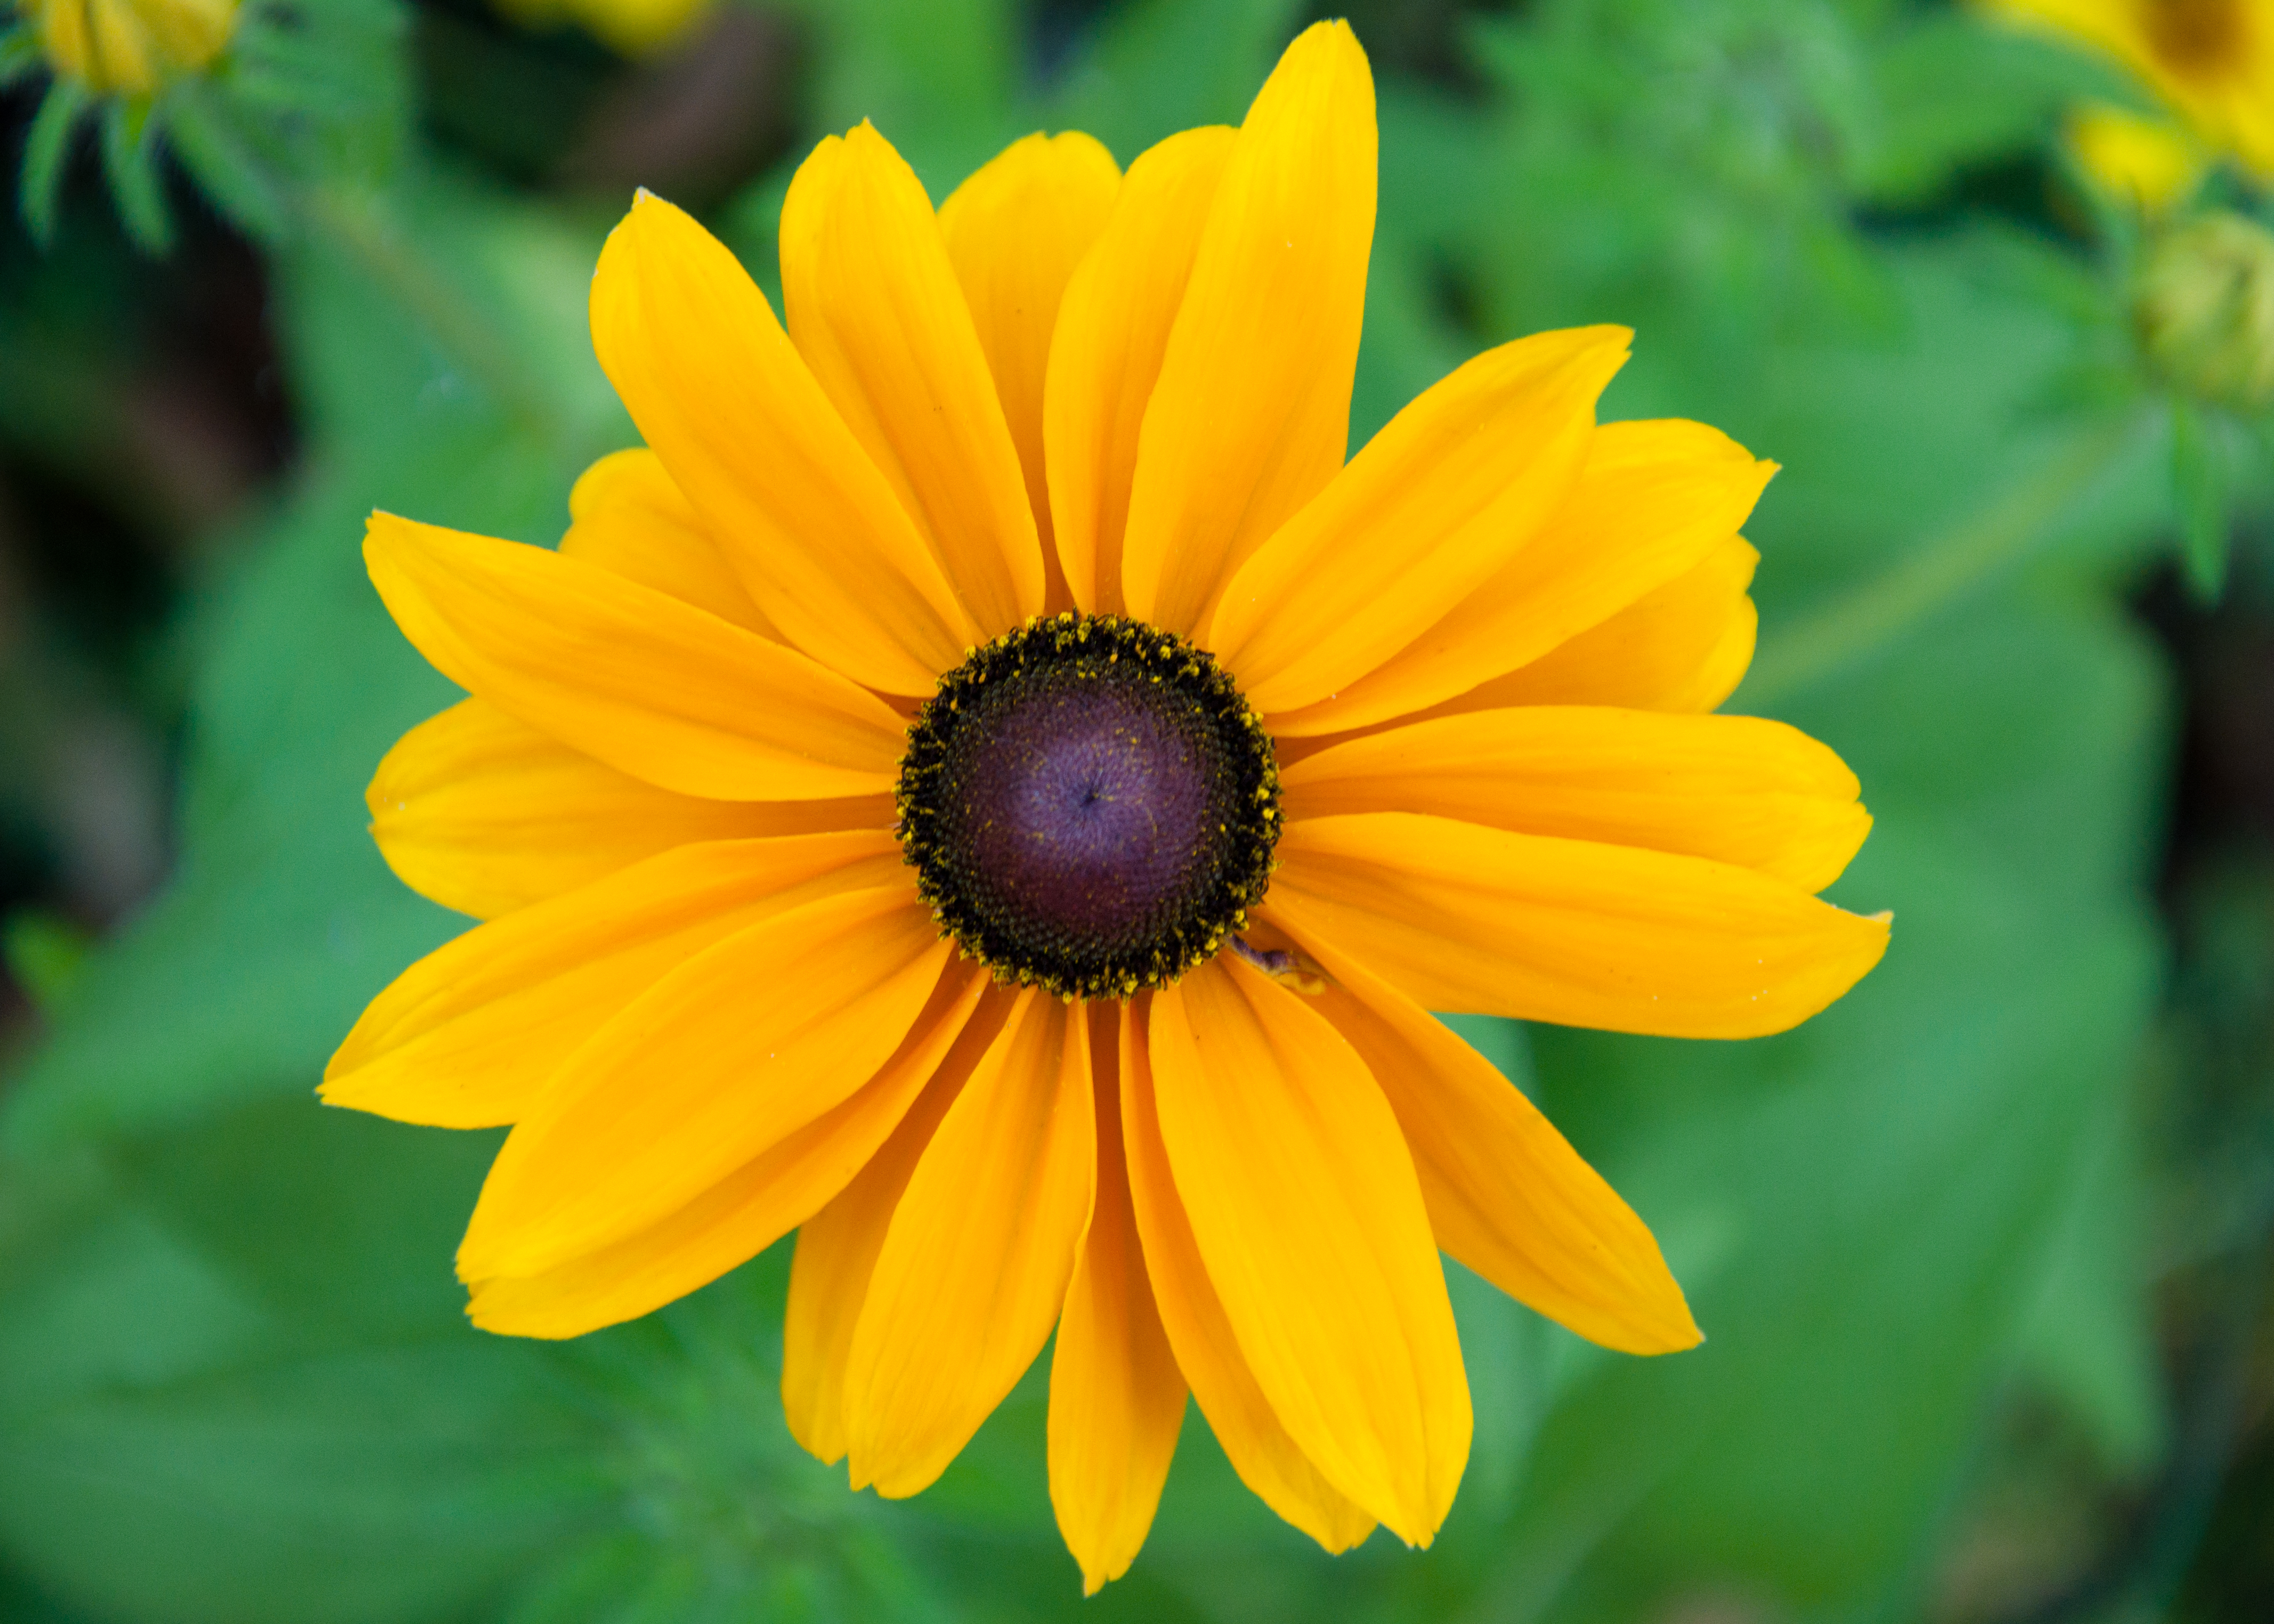 Black-eyed susan flower photo